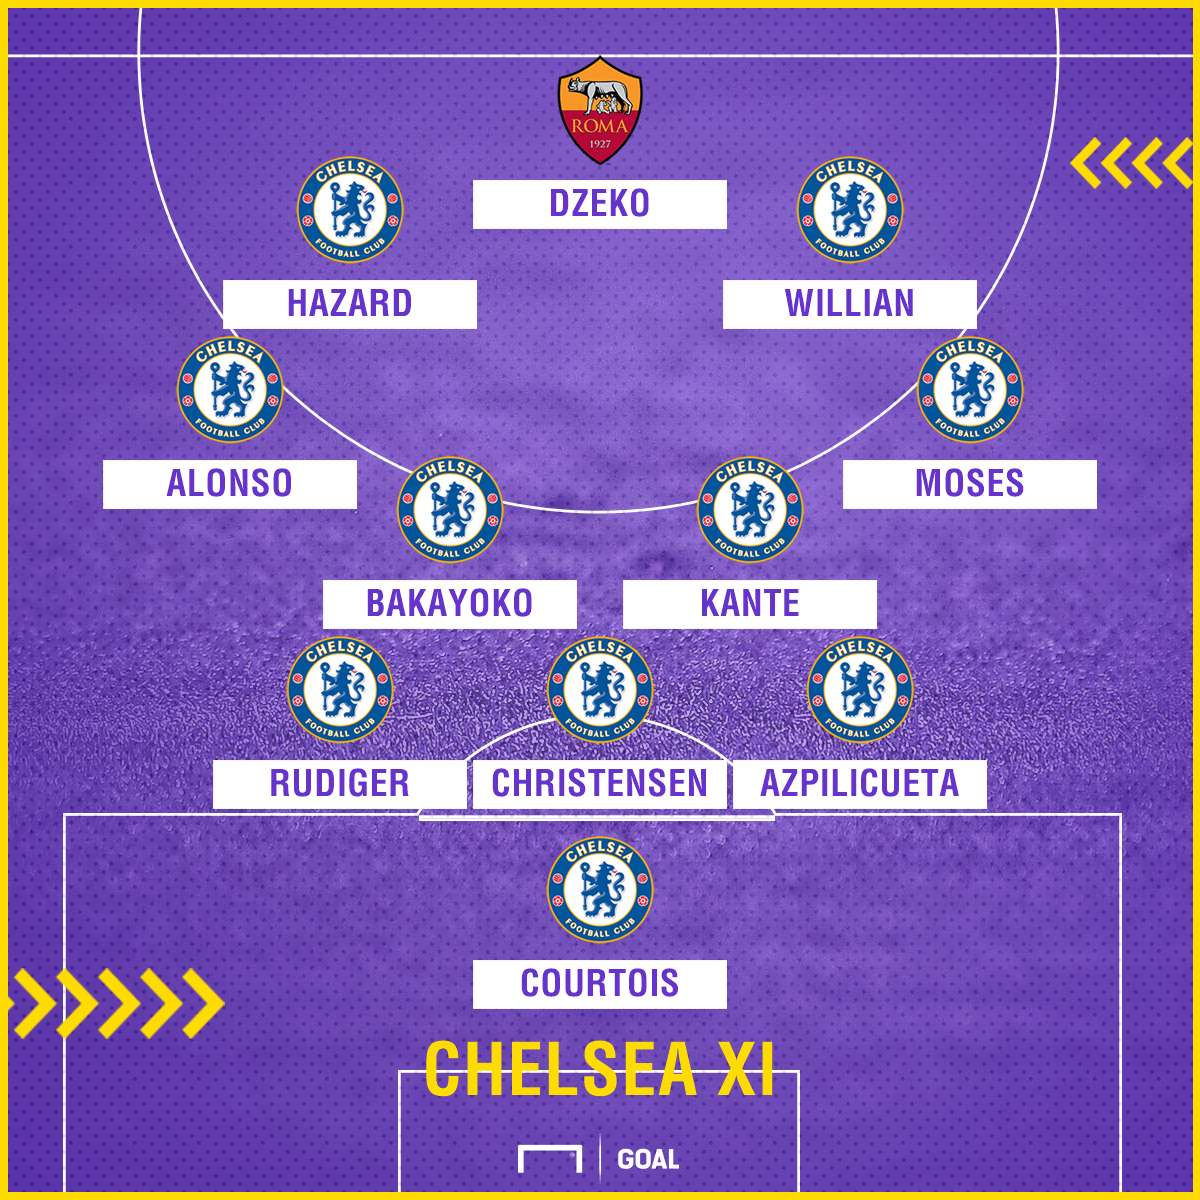 Edin Dzeko in the Chelsea line up